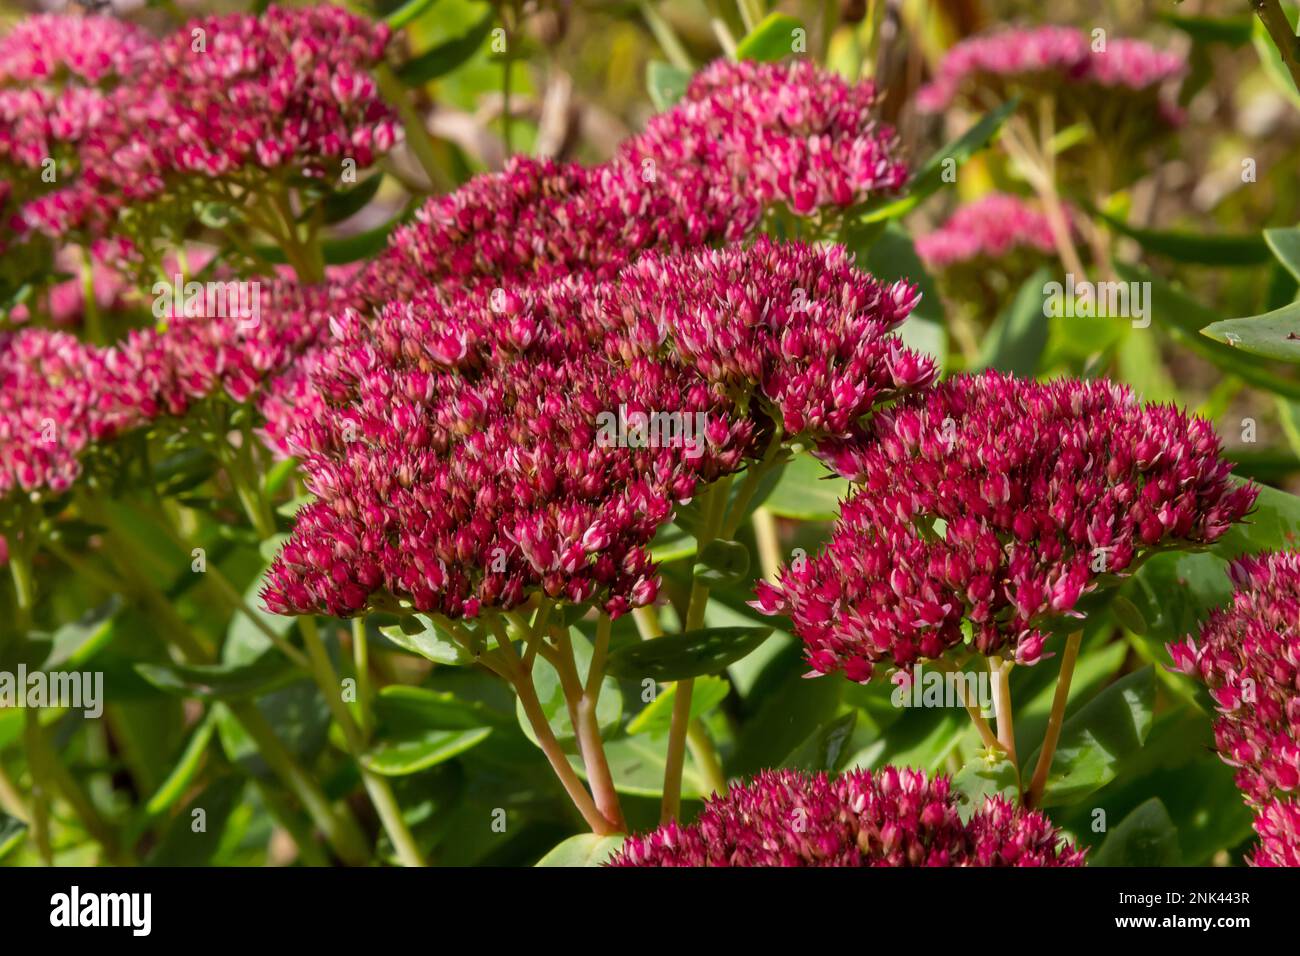 Red flowering sedum plant, Hylotelephium telephium. beautiful autumn flowers in the garden. Stock Photo